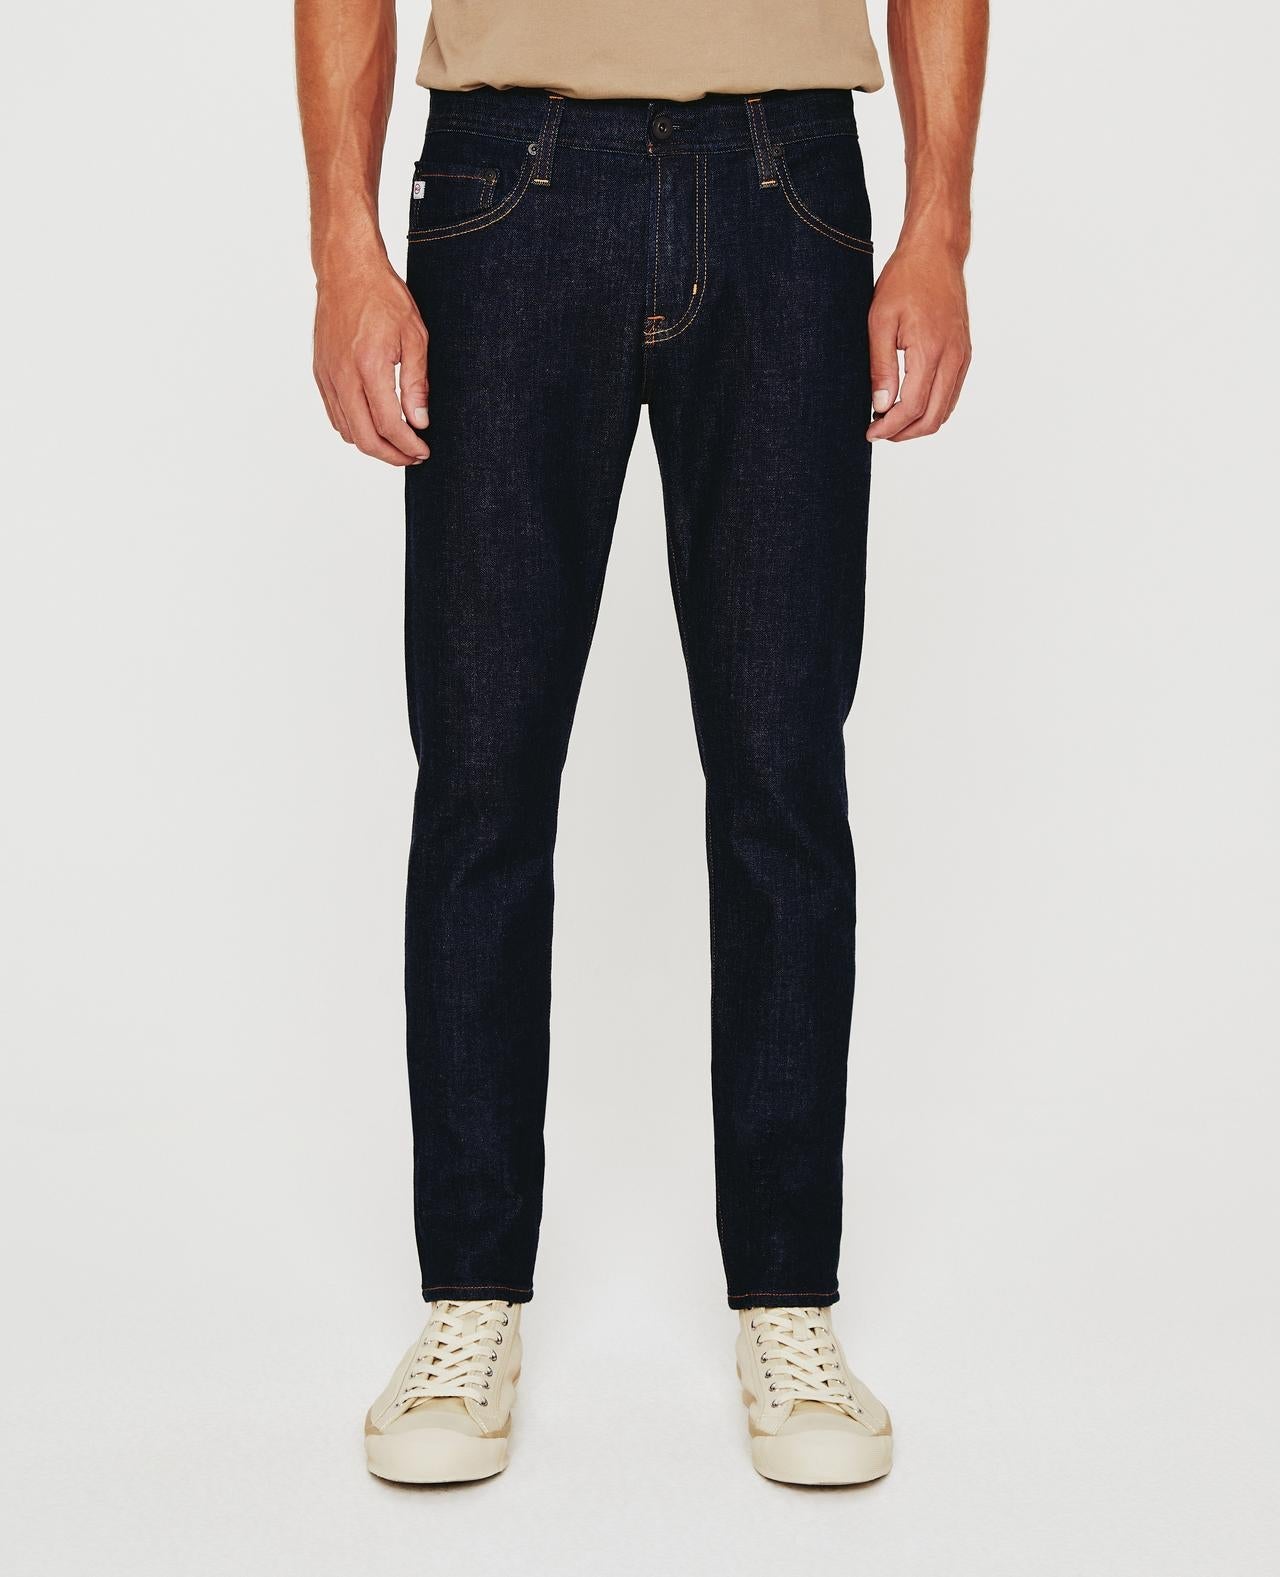 Dylan Slim Skinny Jean - AG Jeans - Danali - 1139TSY-CUCL-29